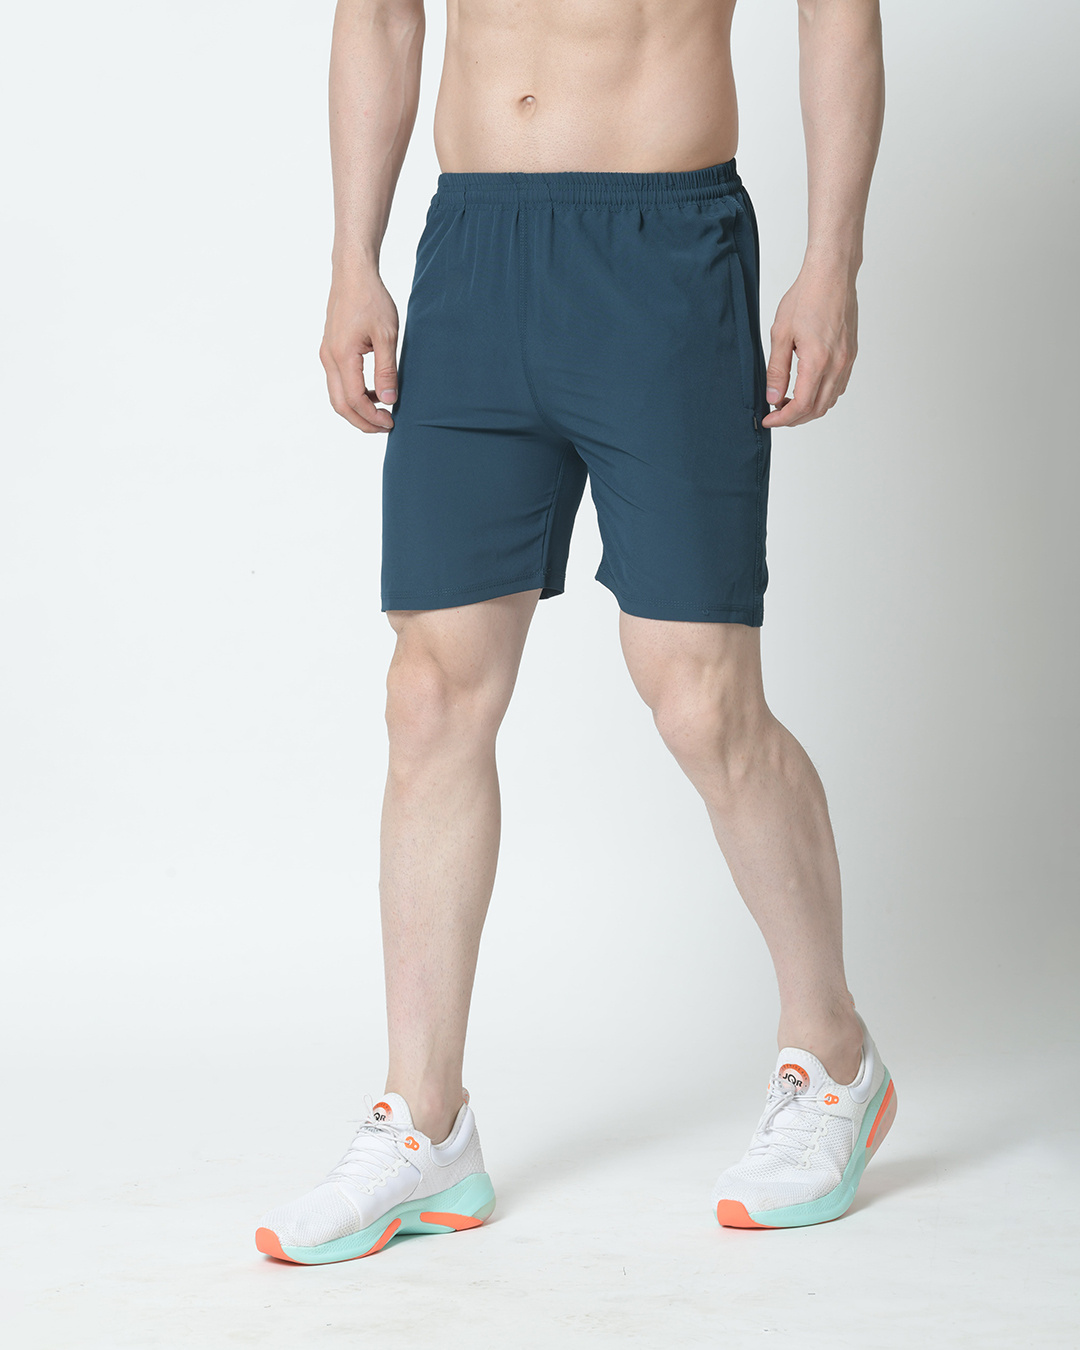 Buy Pack of 2 Men's Green & Blue Shorts Online at Bewakoof